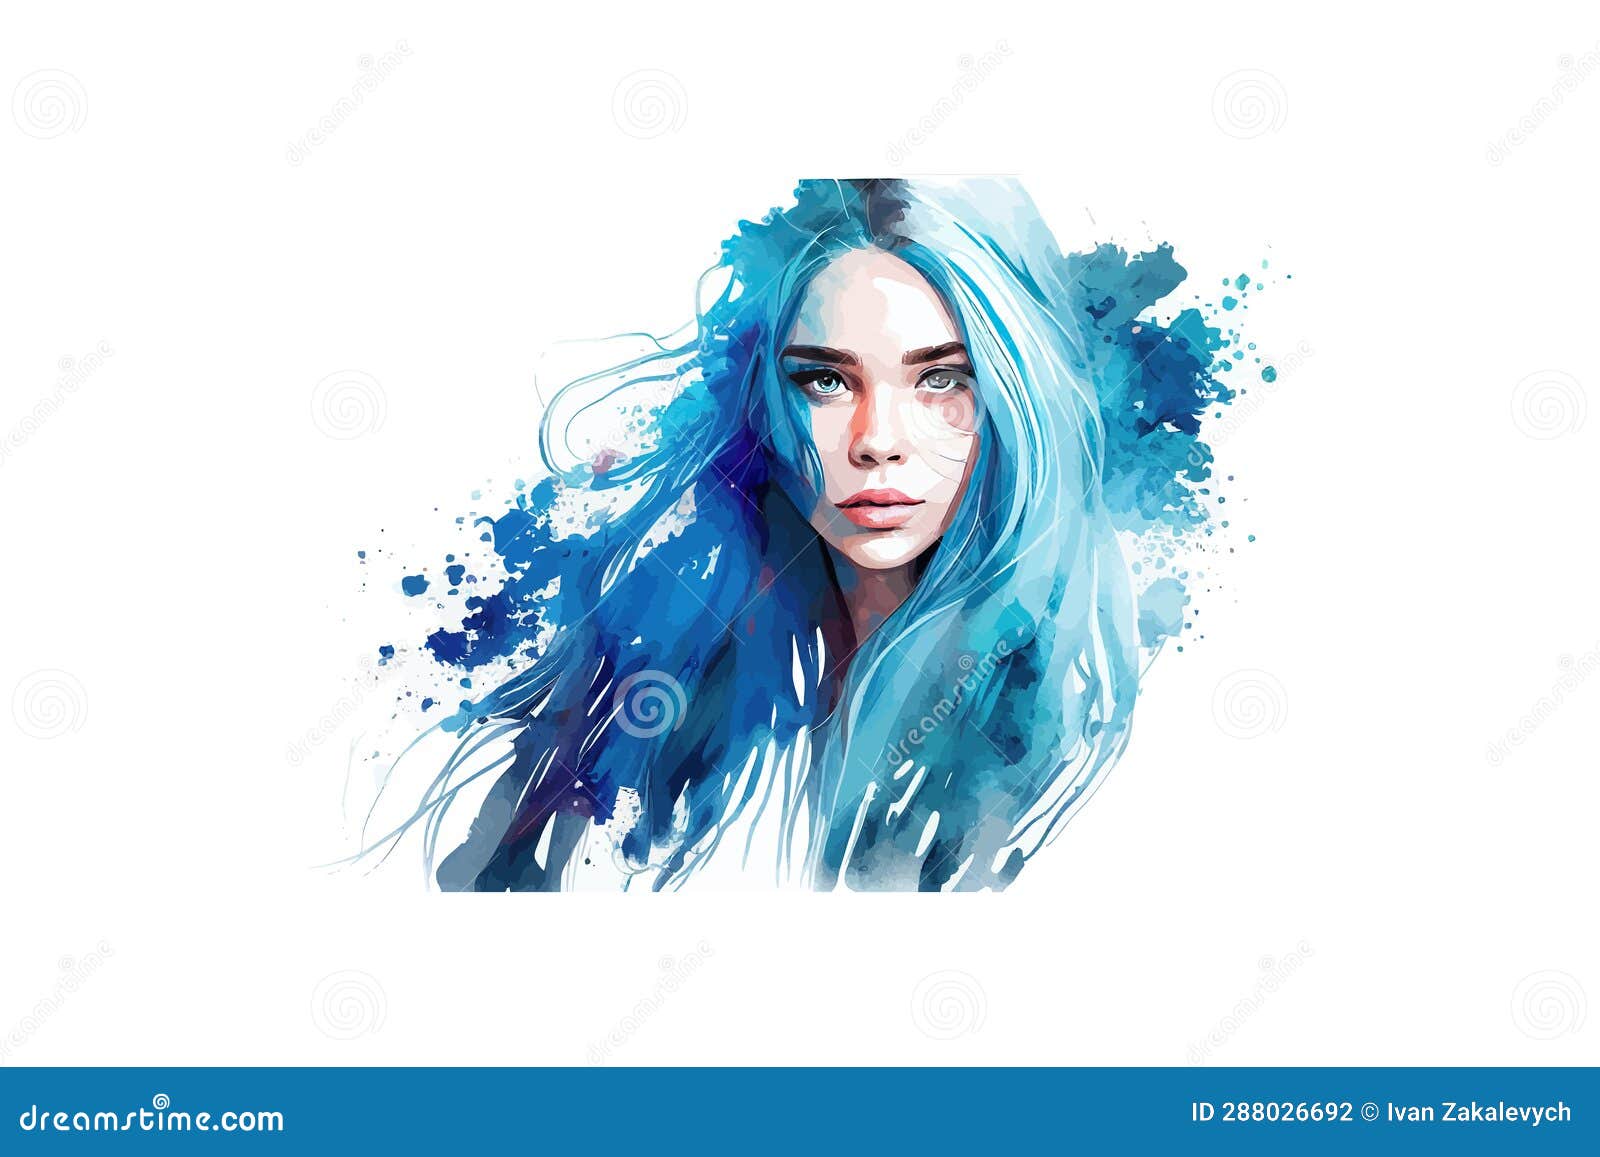 7. Blue Hair Girl Drawing Tumblr - wide 9